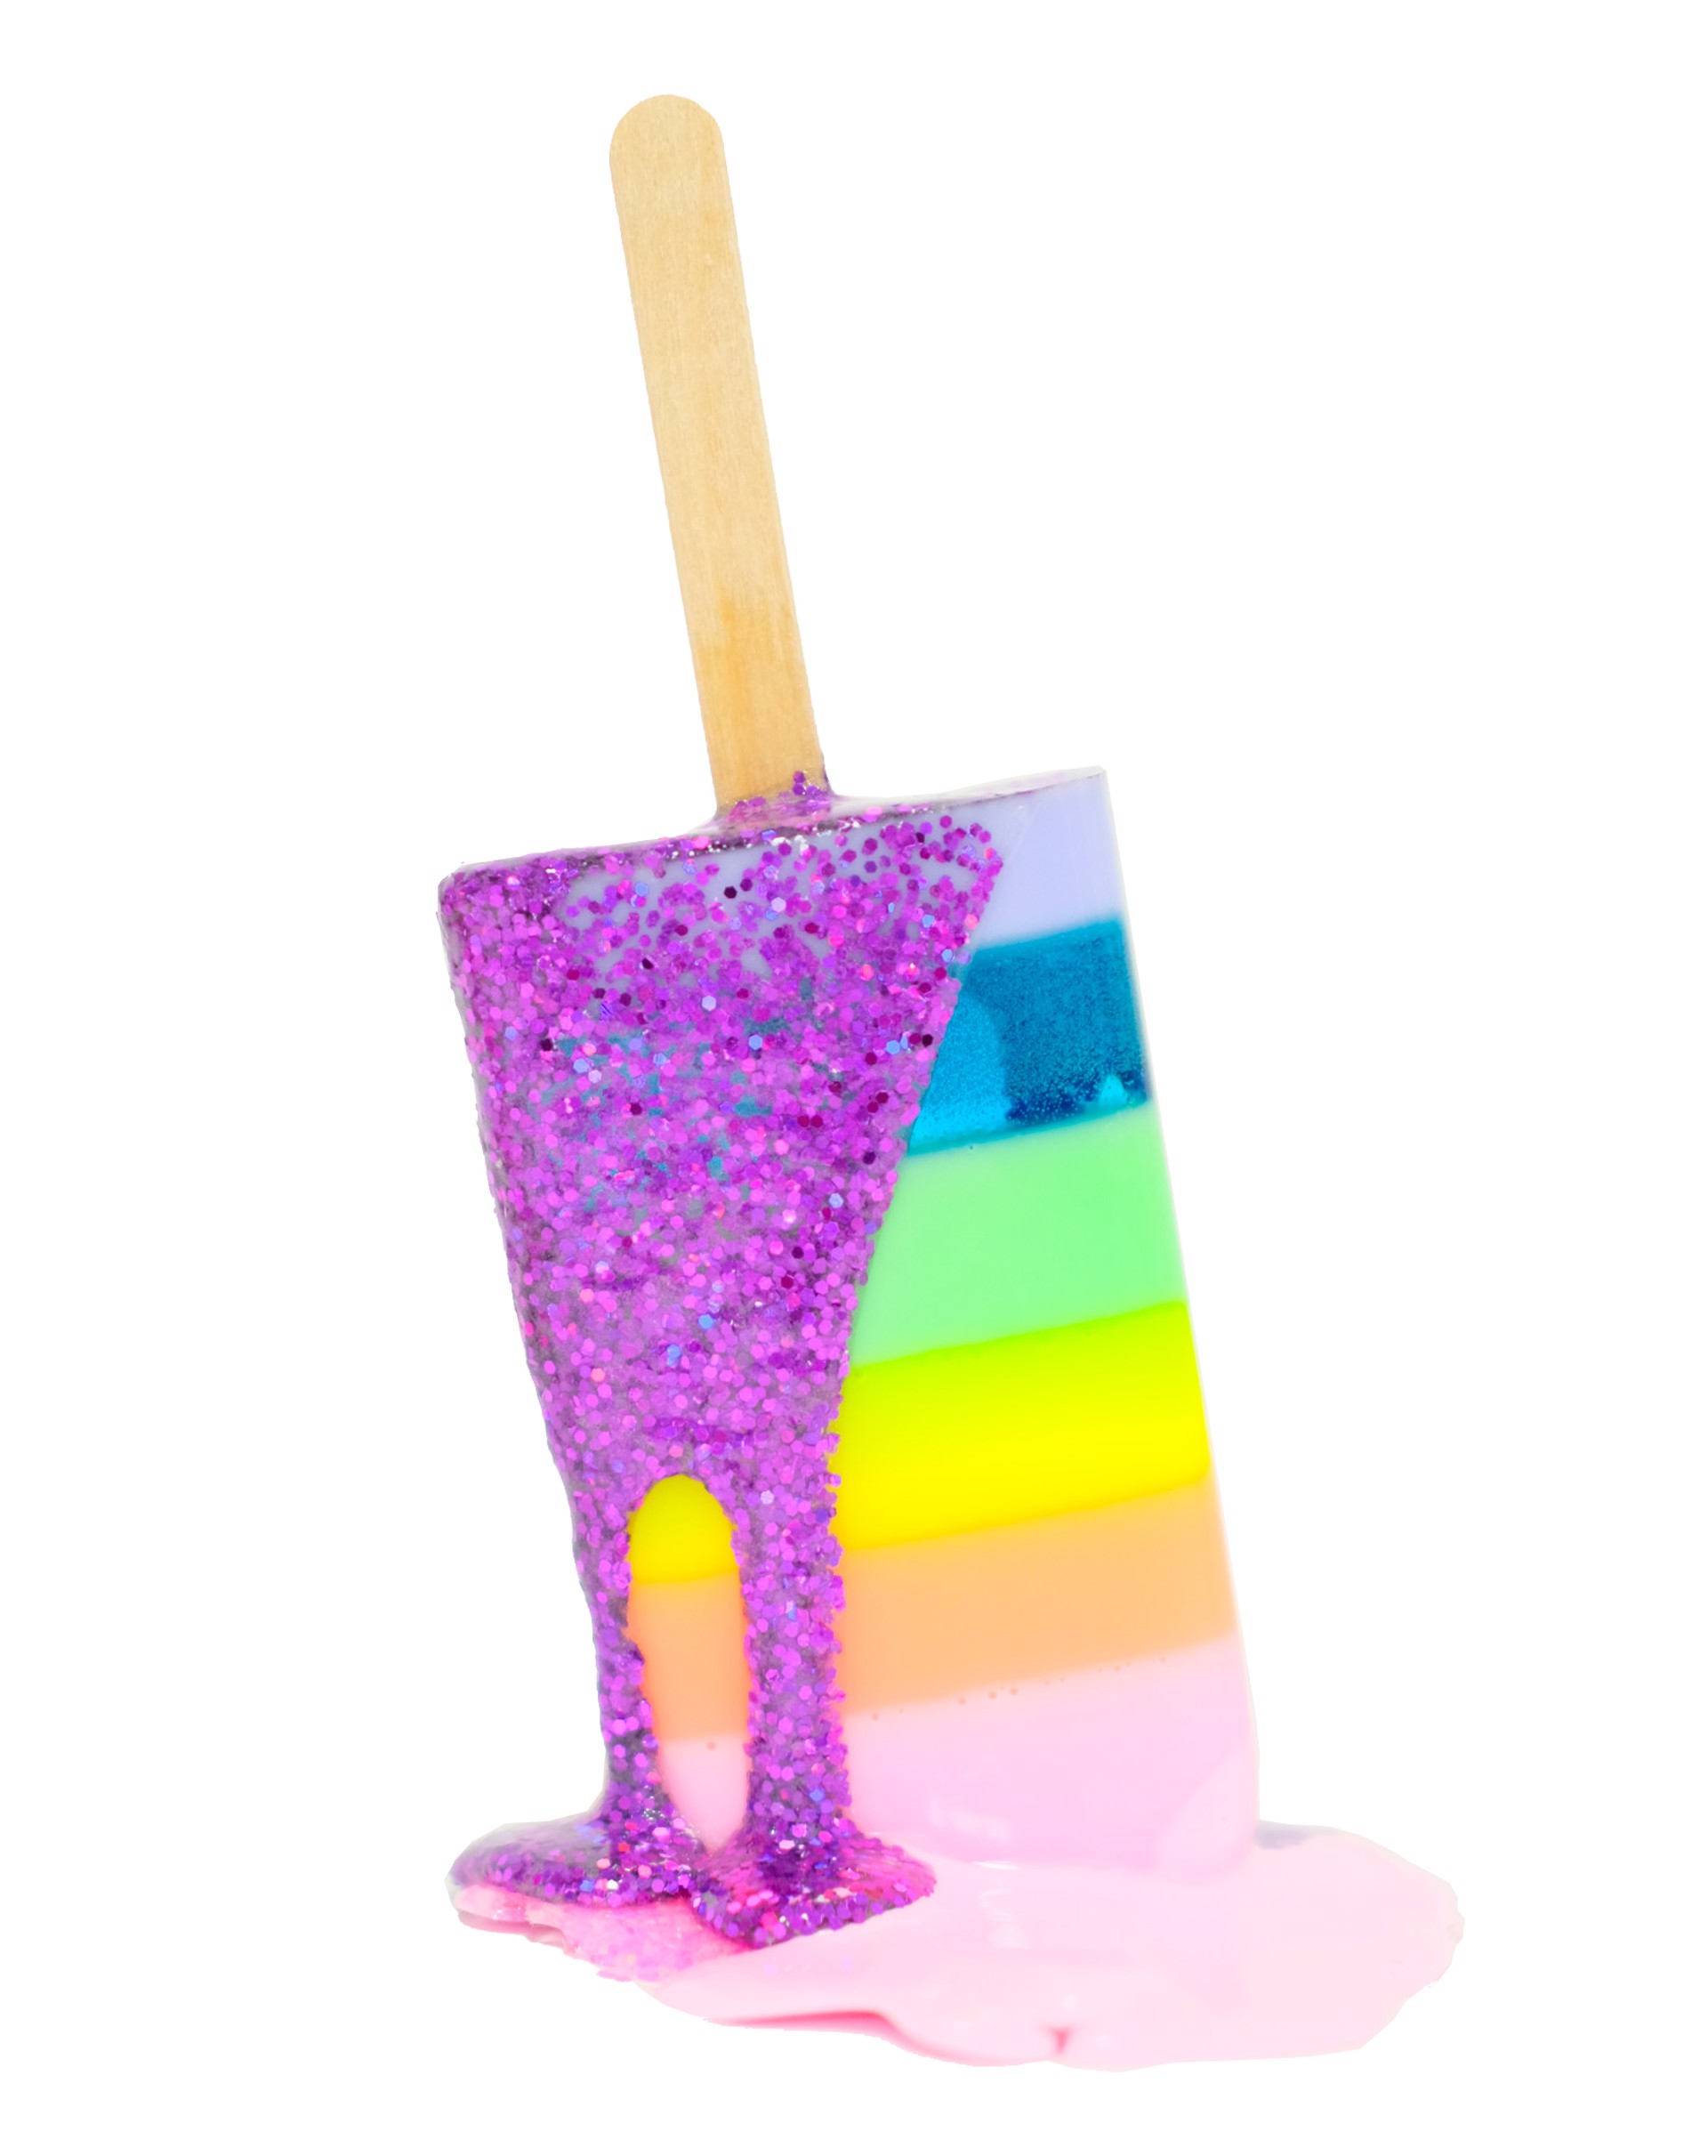 Pastel Rainbow Melting Pop by Betsy Enzensberger